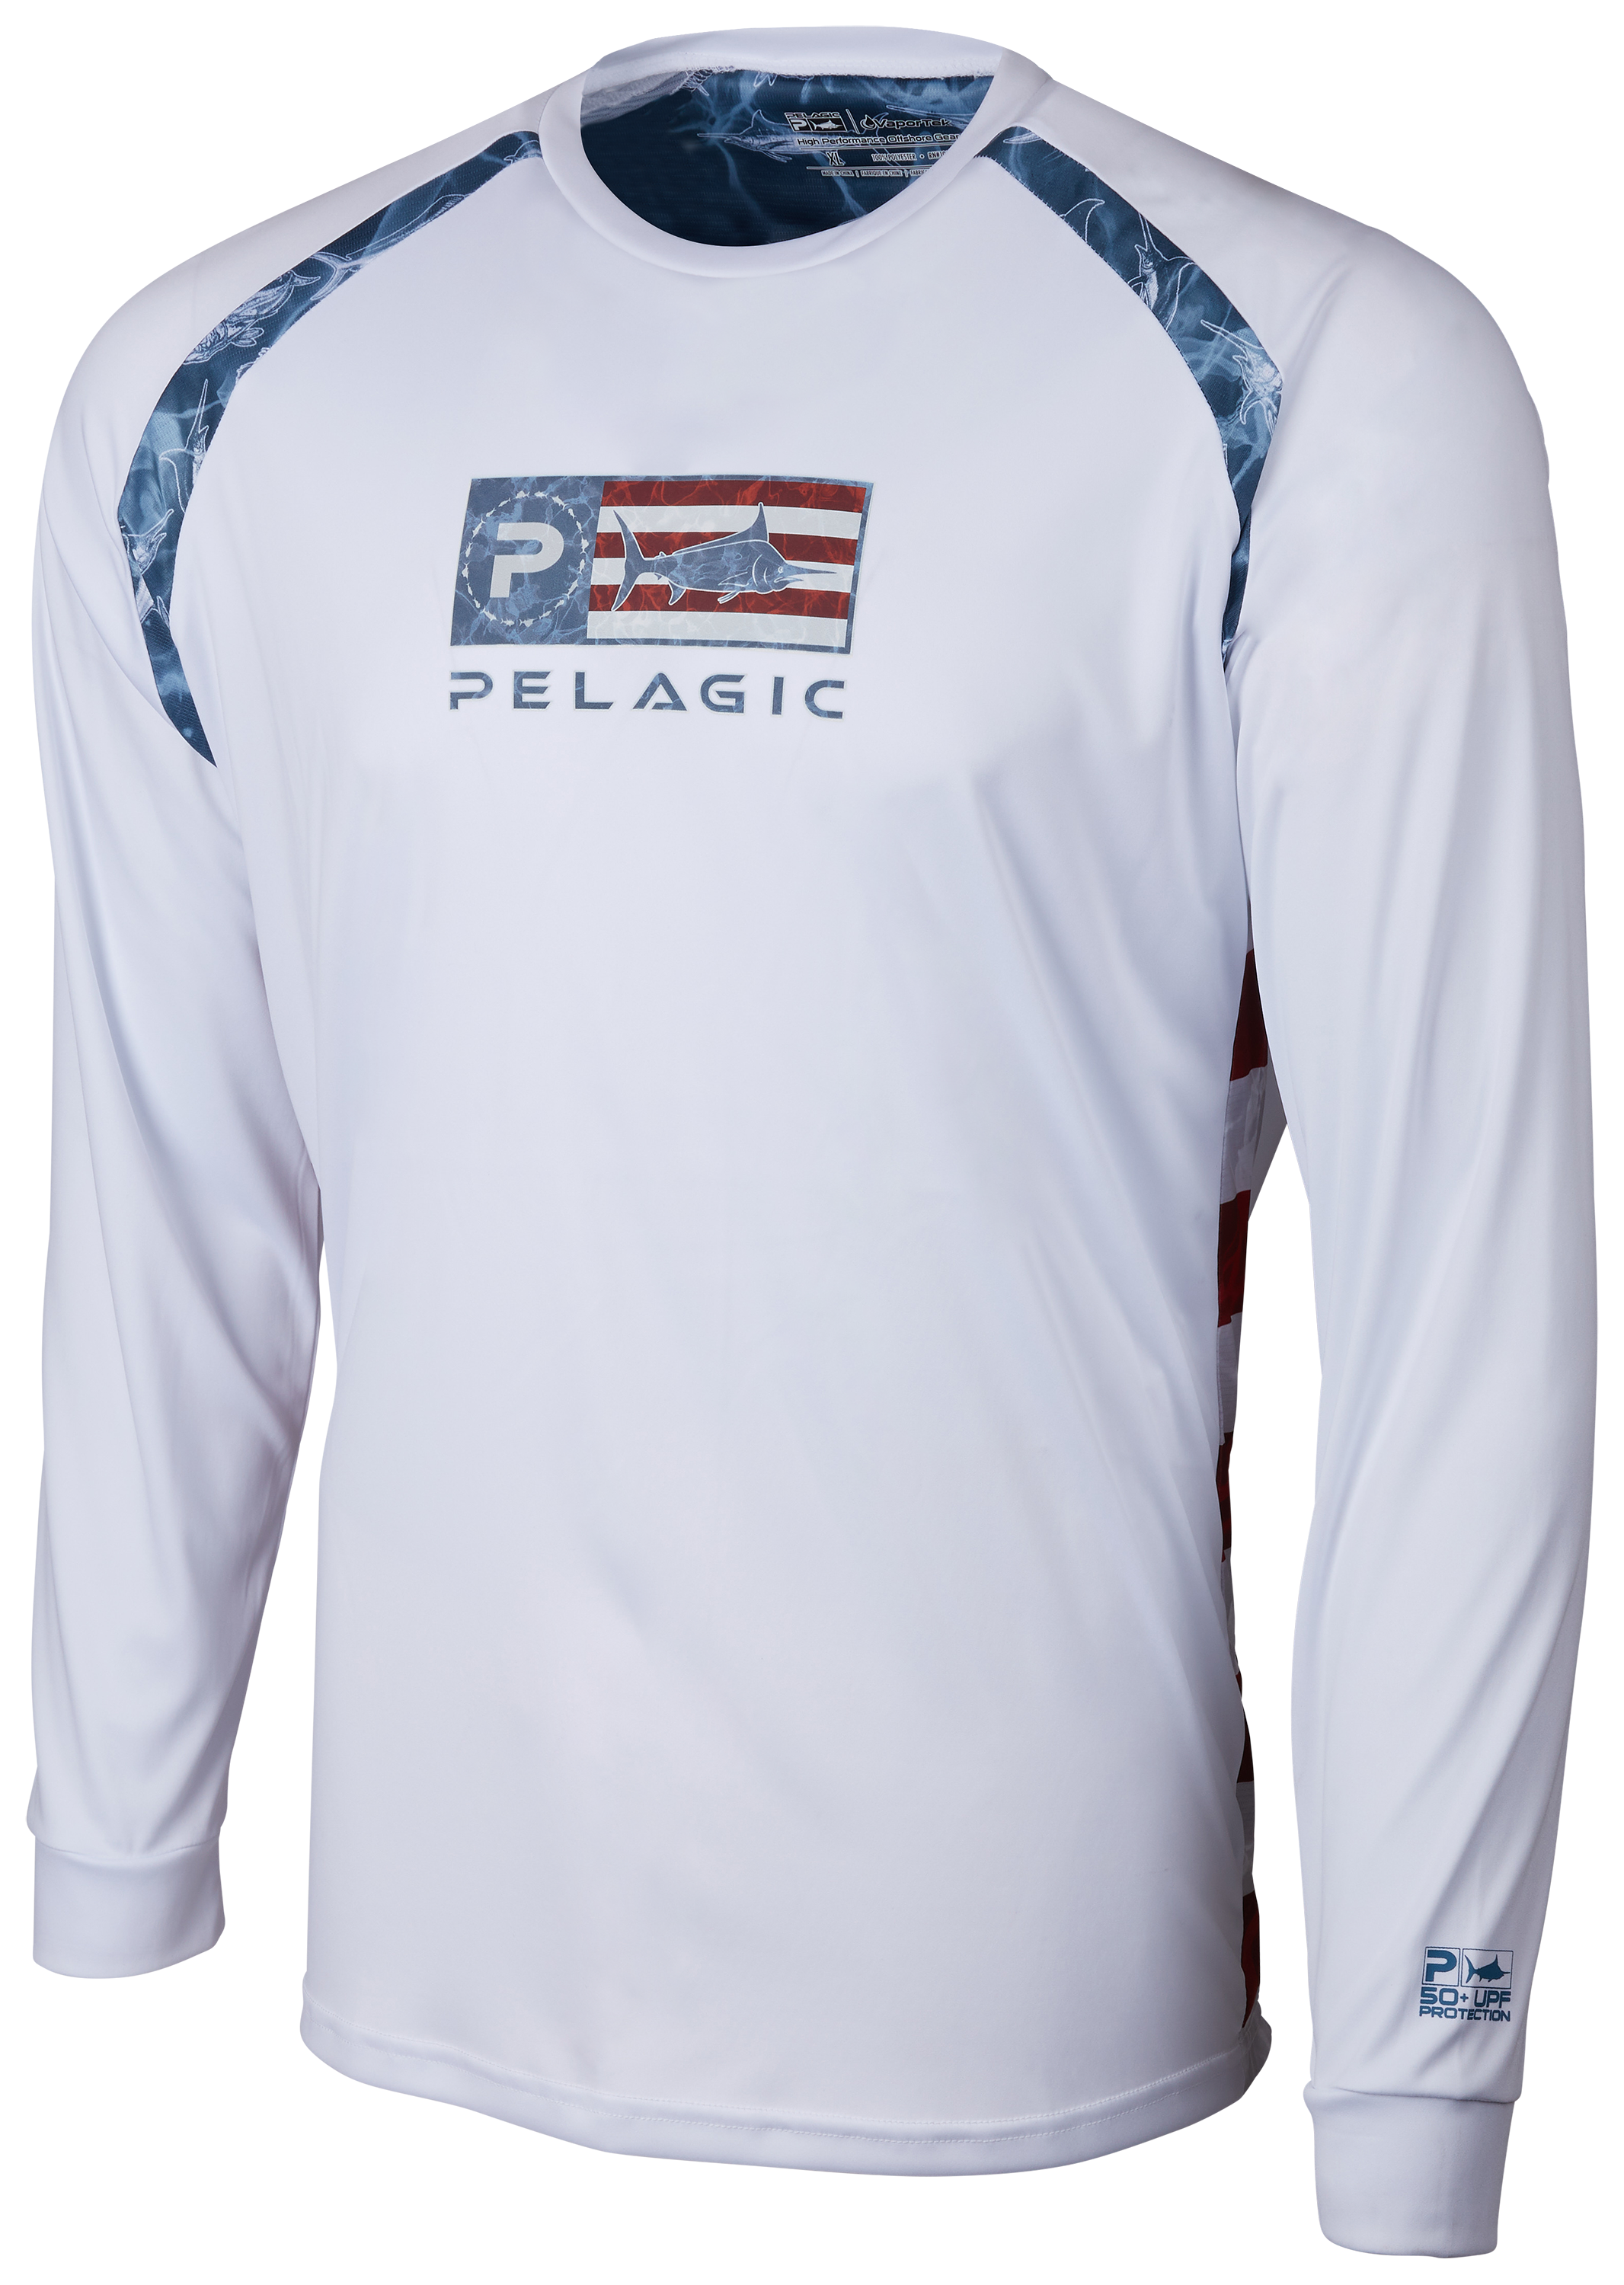 Pelagic VaporTek Sideline Performance Fishing Long-Sleeve Shirt